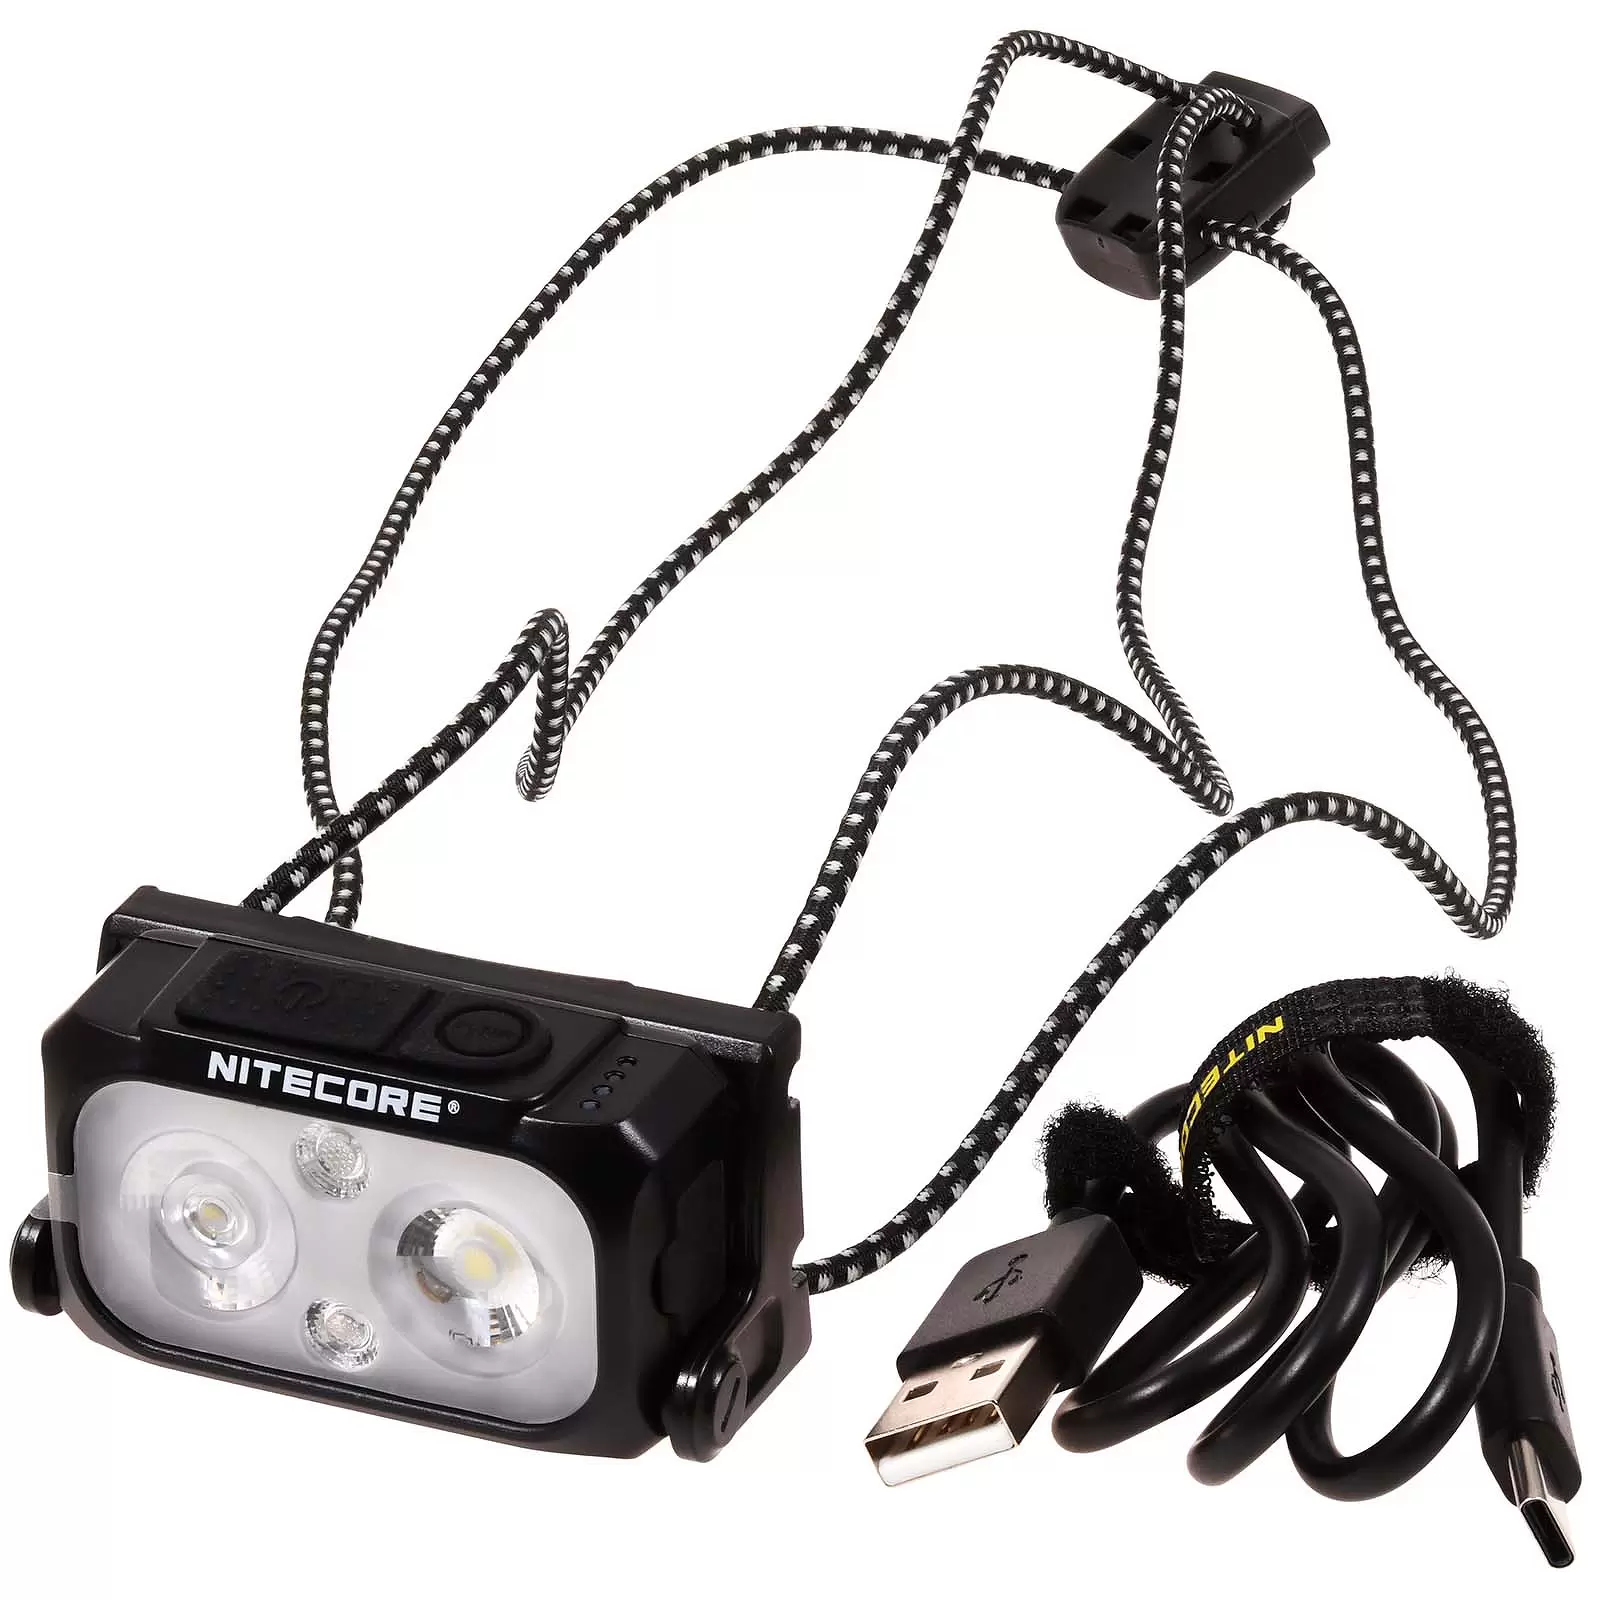 Nitecore NU21 LED Kopflampe, Stirnlampe, Headlamp, USB-C, max. 360 Lumen